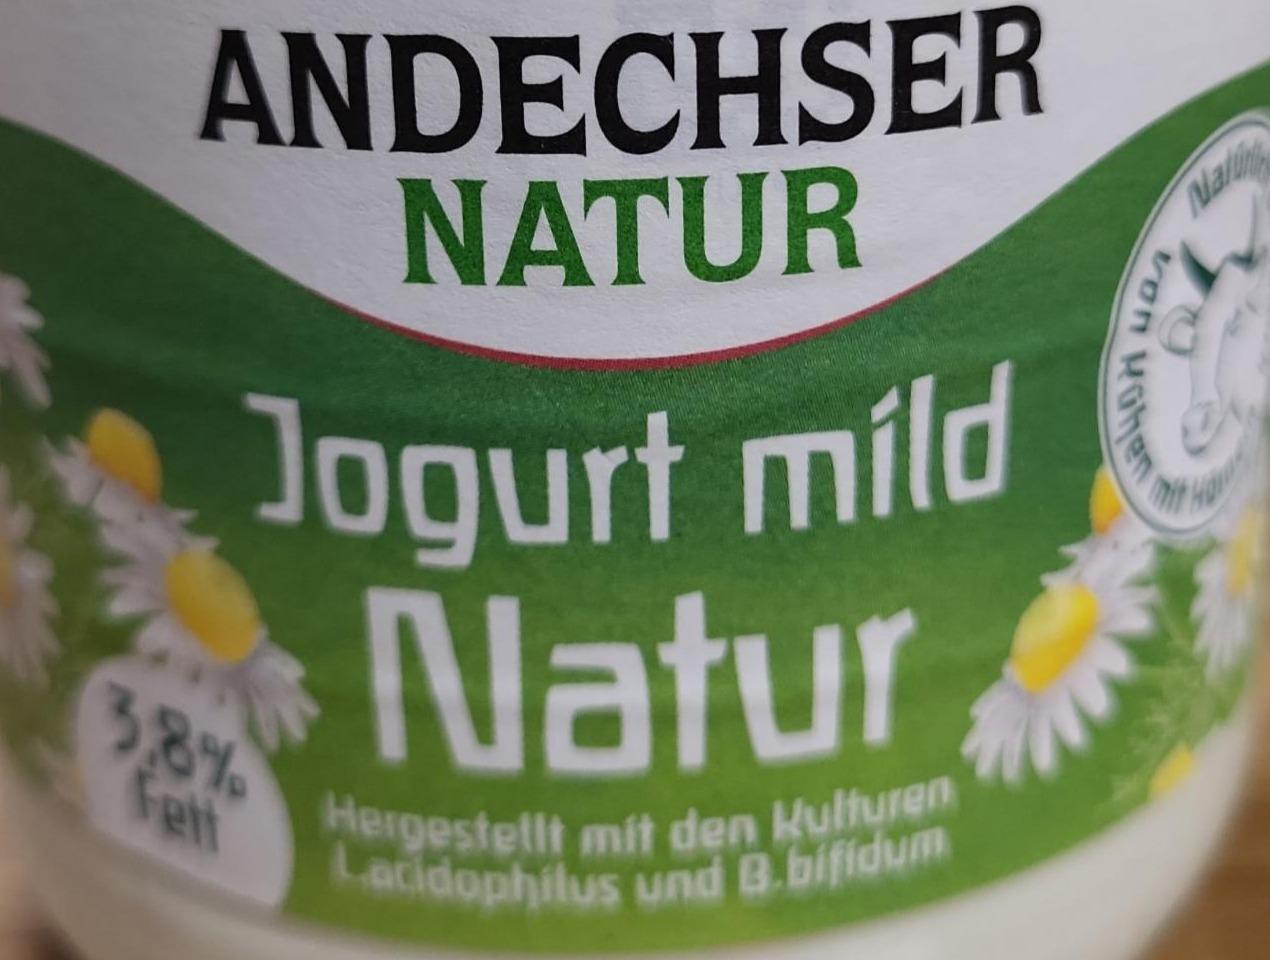 Фото - Demeter Jogurt mild Natur 3,8% Andechser Natur